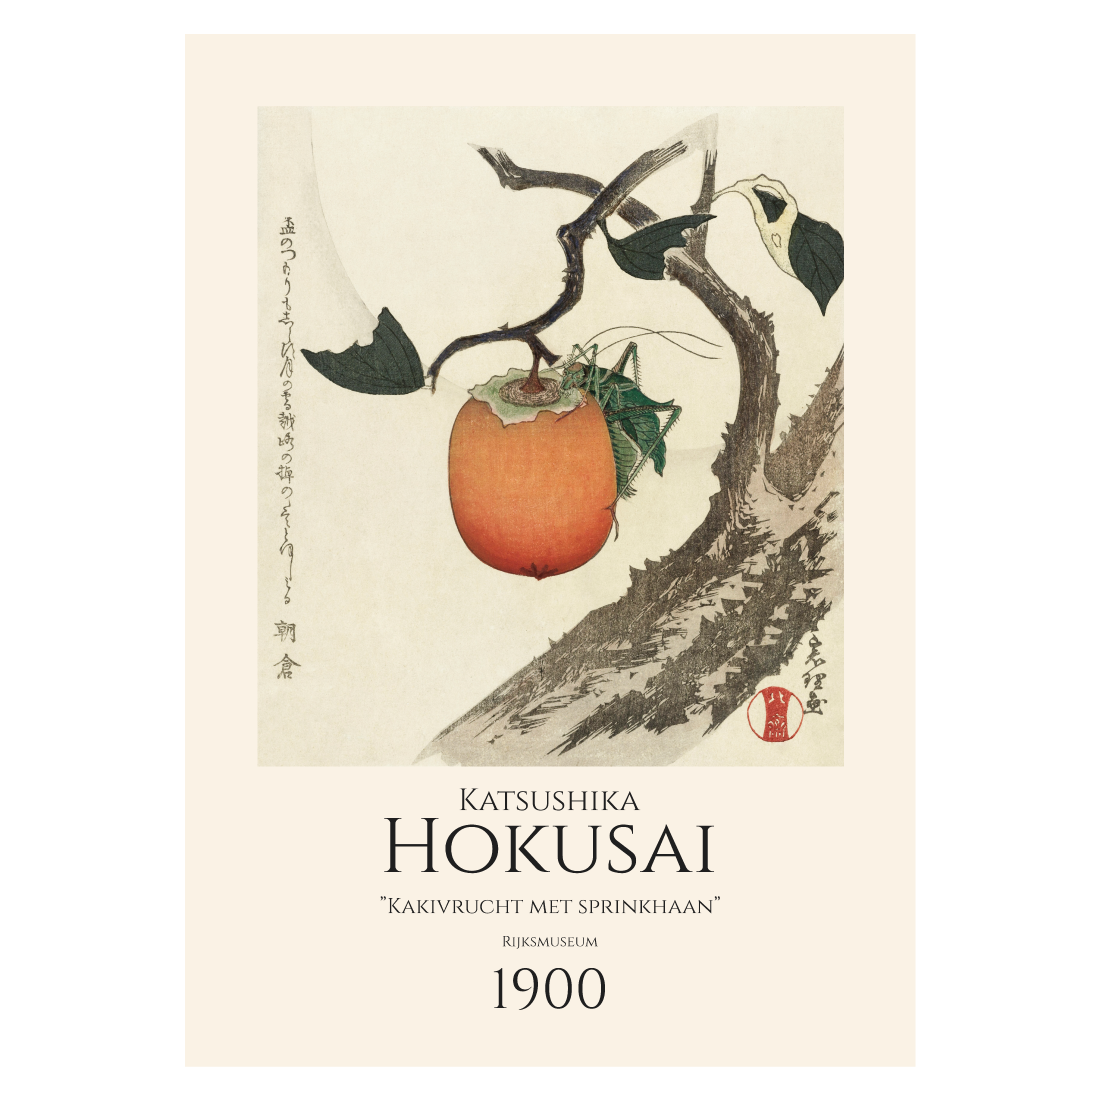 Kunstplakat med Hokusais "Kakivrucht met sprinkhaan"